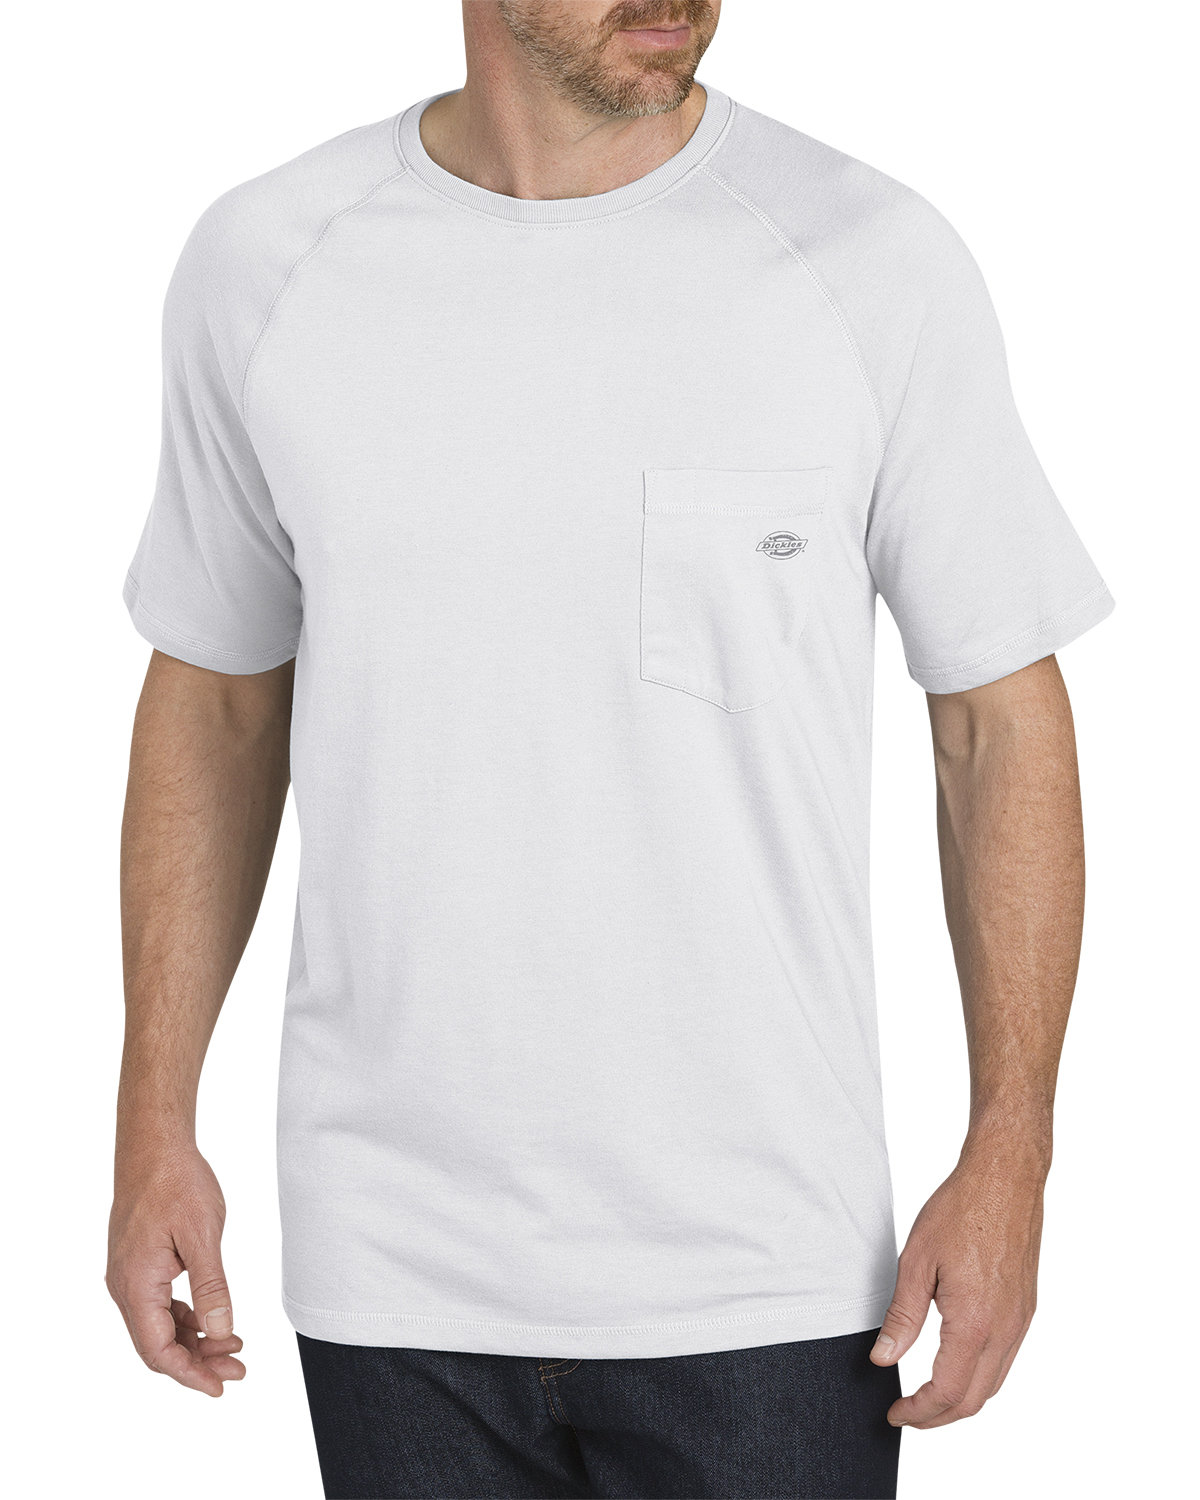 Dickies Men's 5.5 oz. Temp-IQ Performance T-Shirt WHITE 